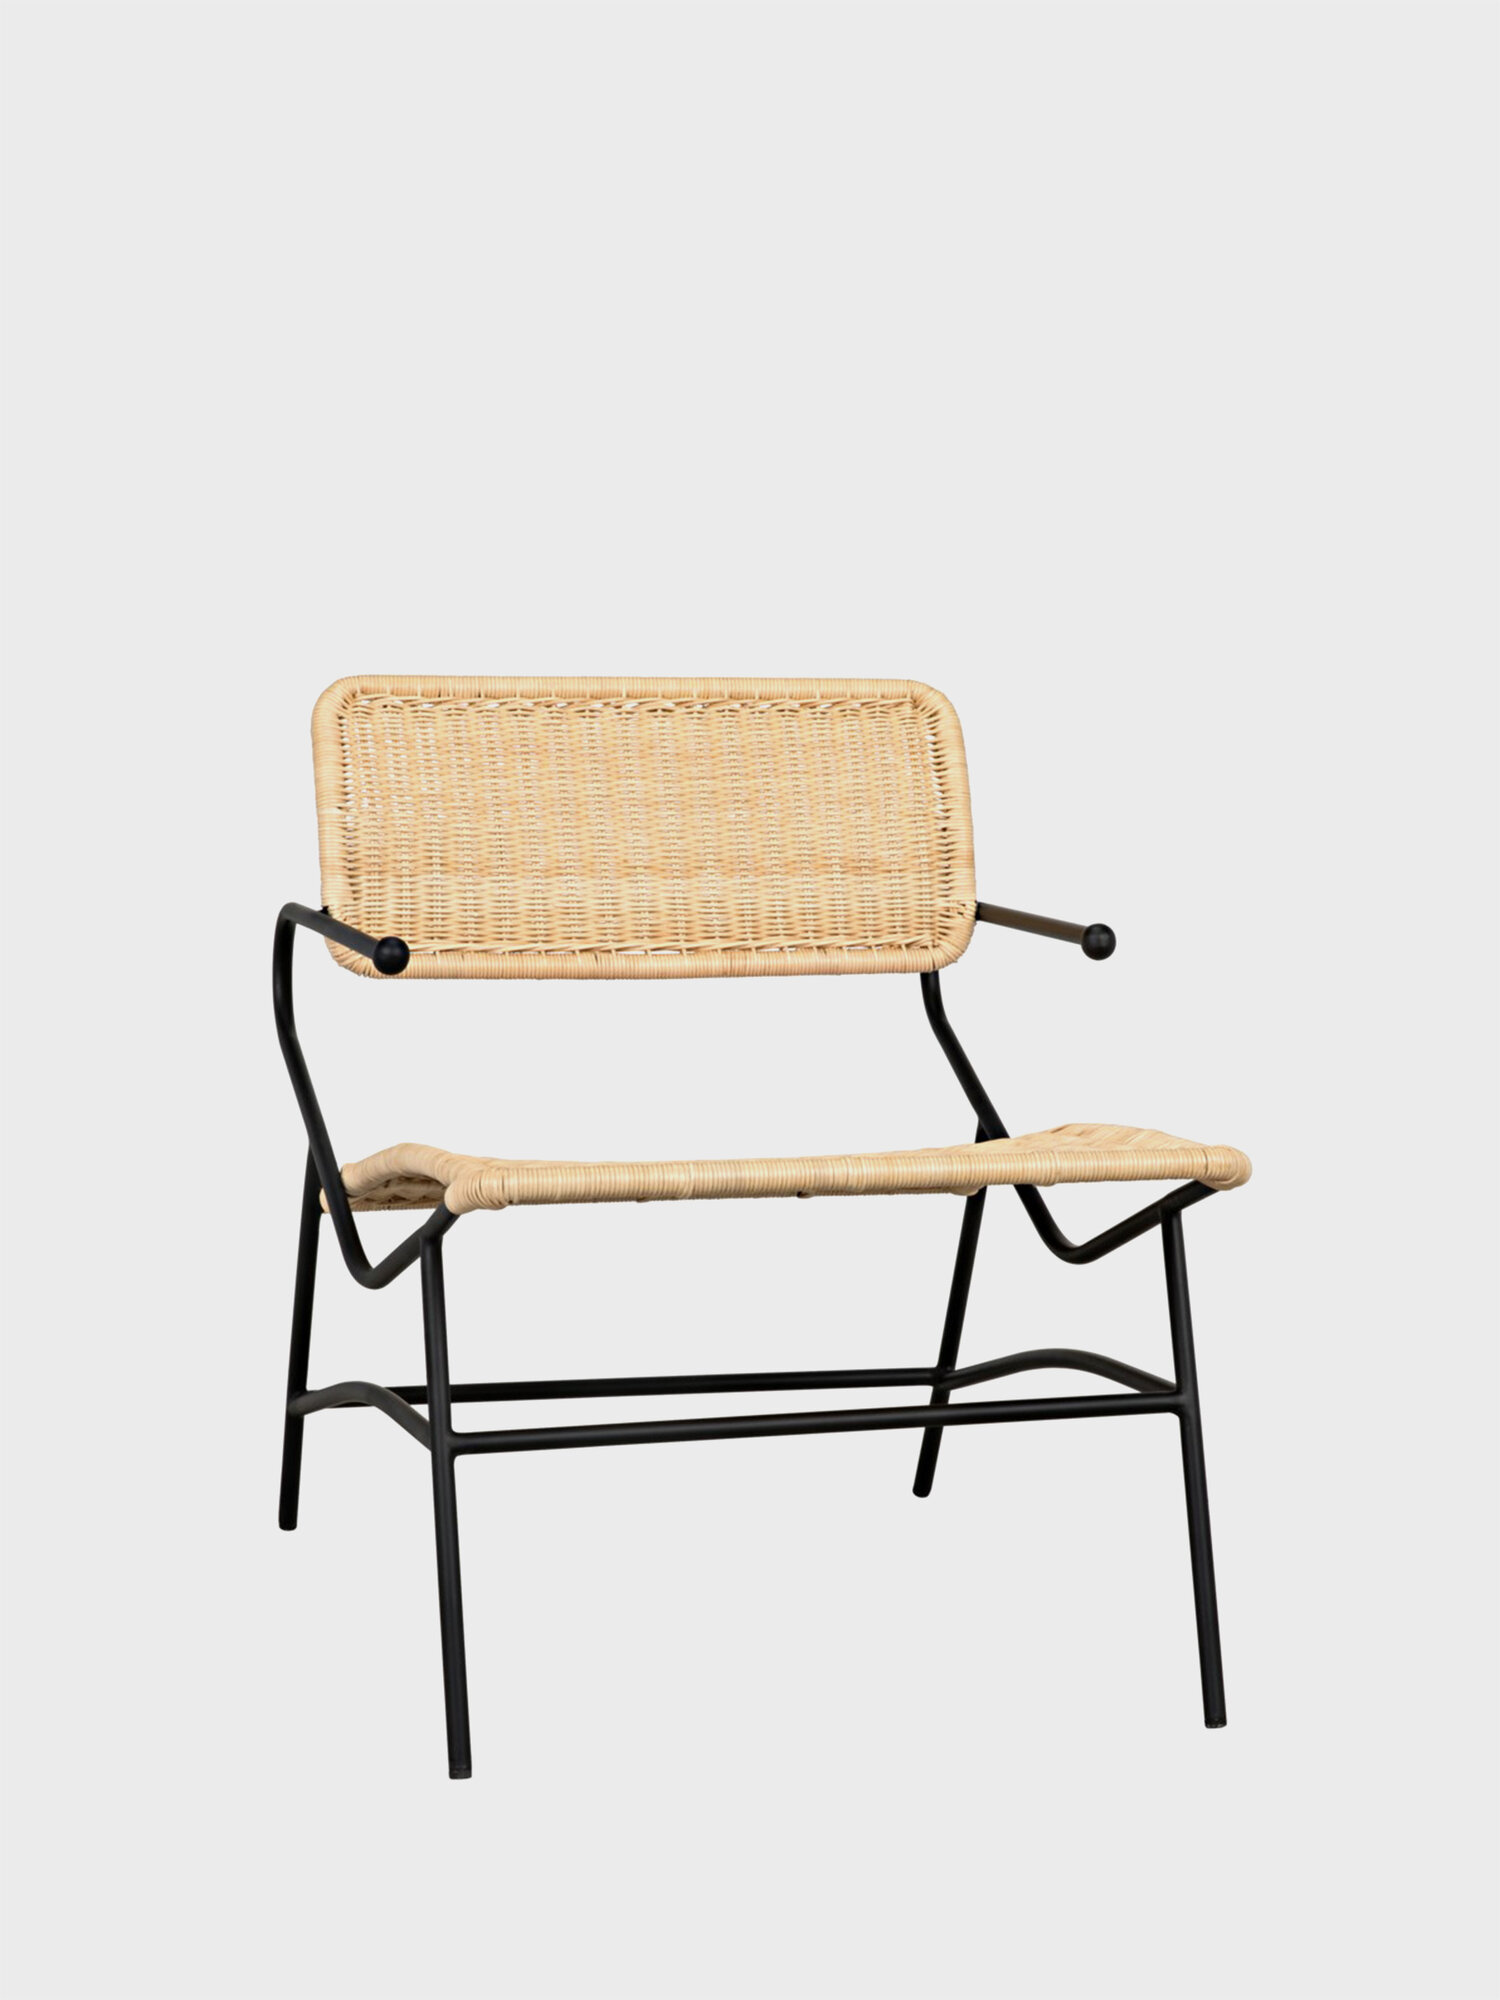 tenun woven chair — sunday shop